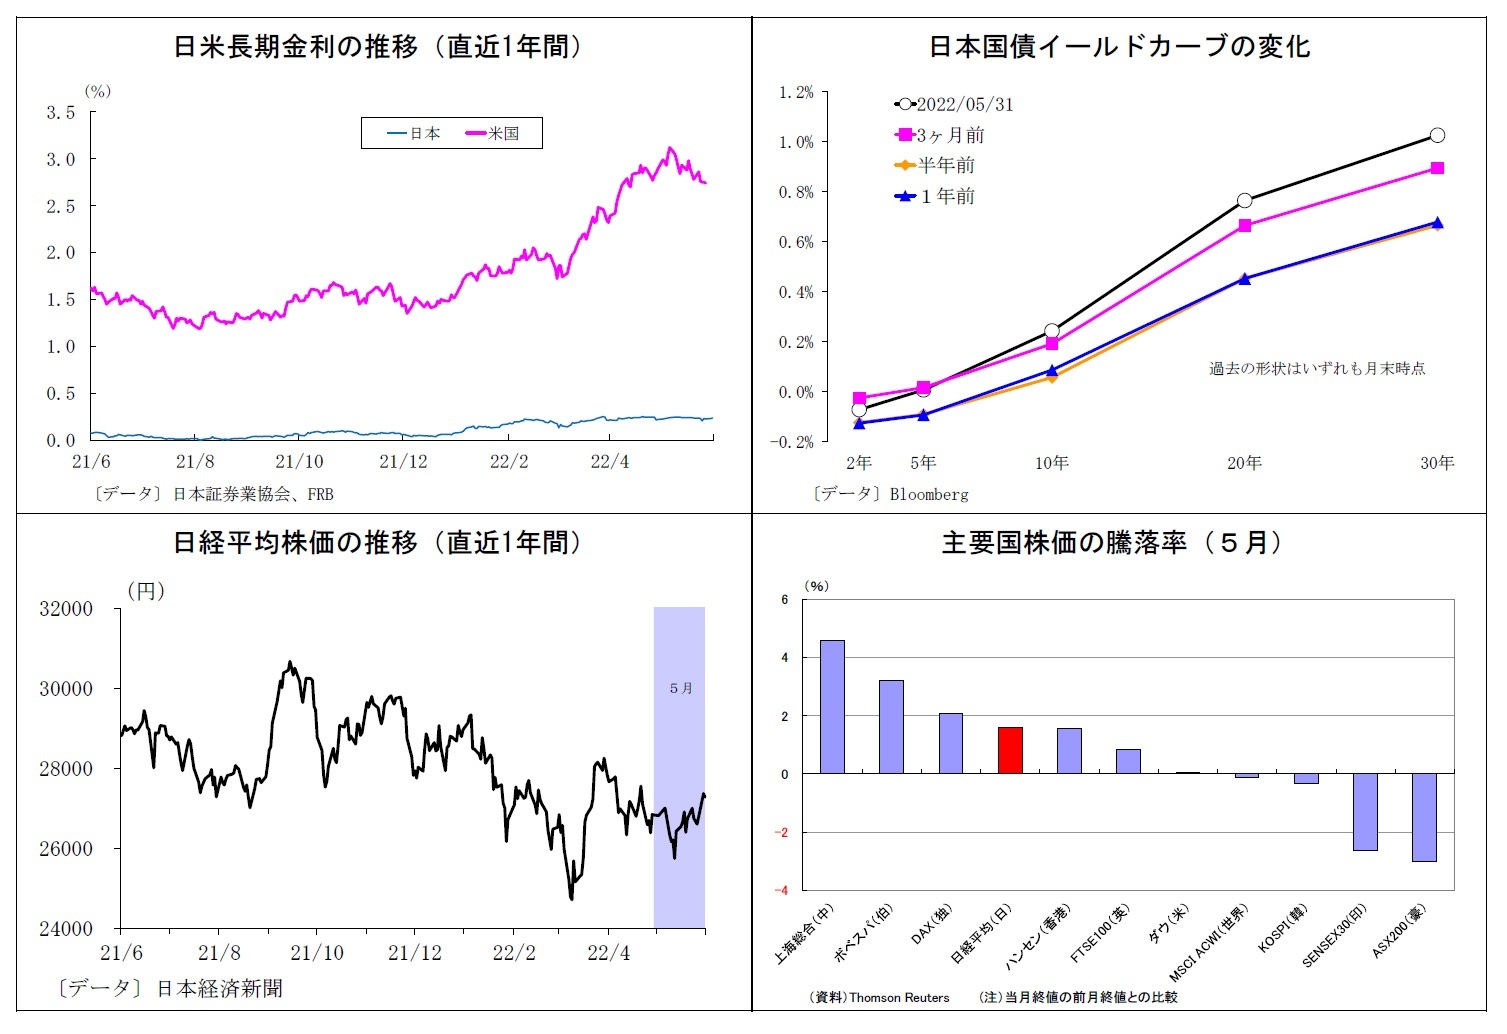 日米長期金利の推移（直近1年間）/日本国債イールドカーブの変化/日経平均株価の推移（直近1年間）/主要国株価の騰落率（５月）